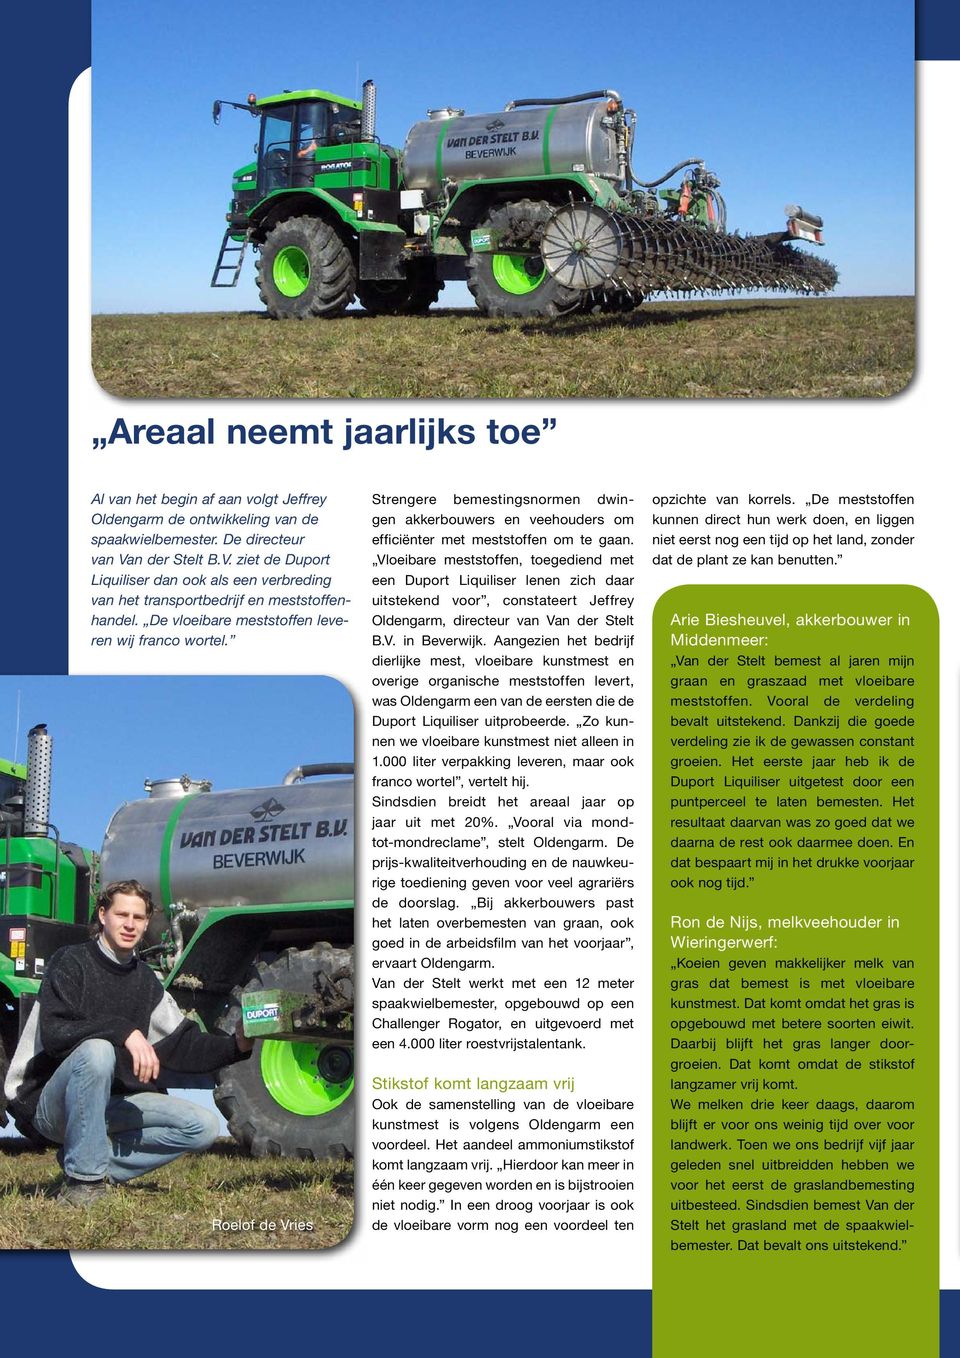 Roelof de Vries Strengere bemestingsnormen dwingen akkerbouwers en veehouders om efficiënter met meststoffen om te gaan.